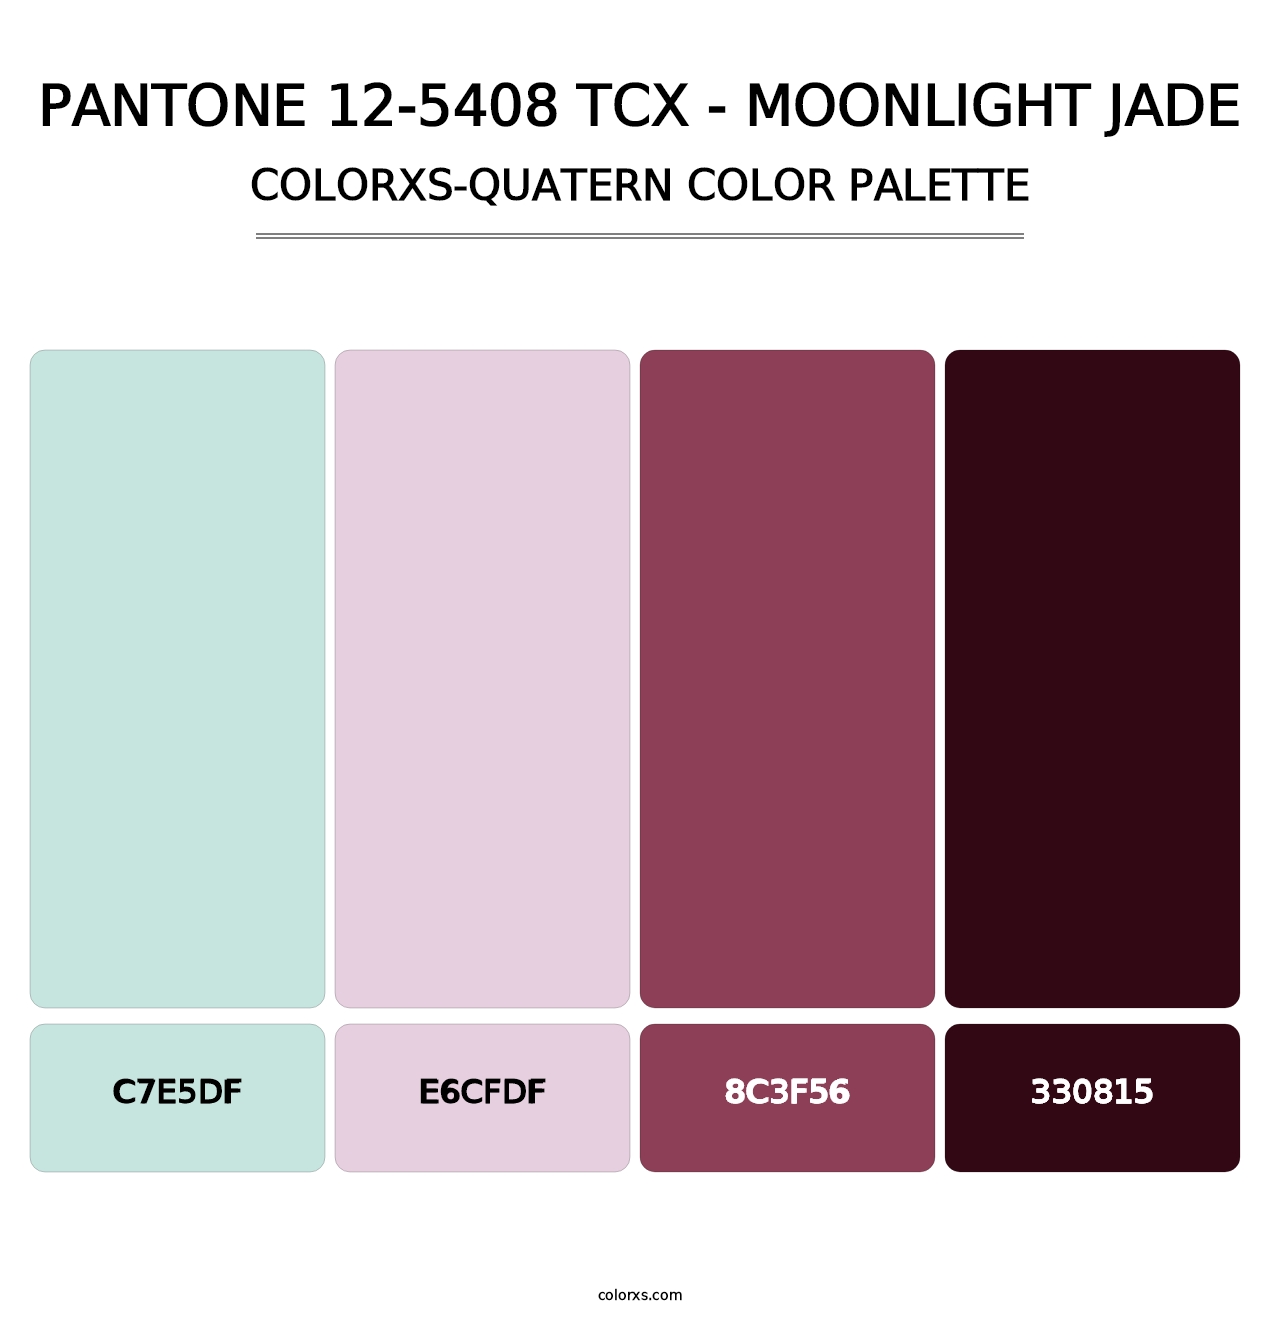 PANTONE 12-5408 TCX - Moonlight Jade - Colorxs Quatern Palette